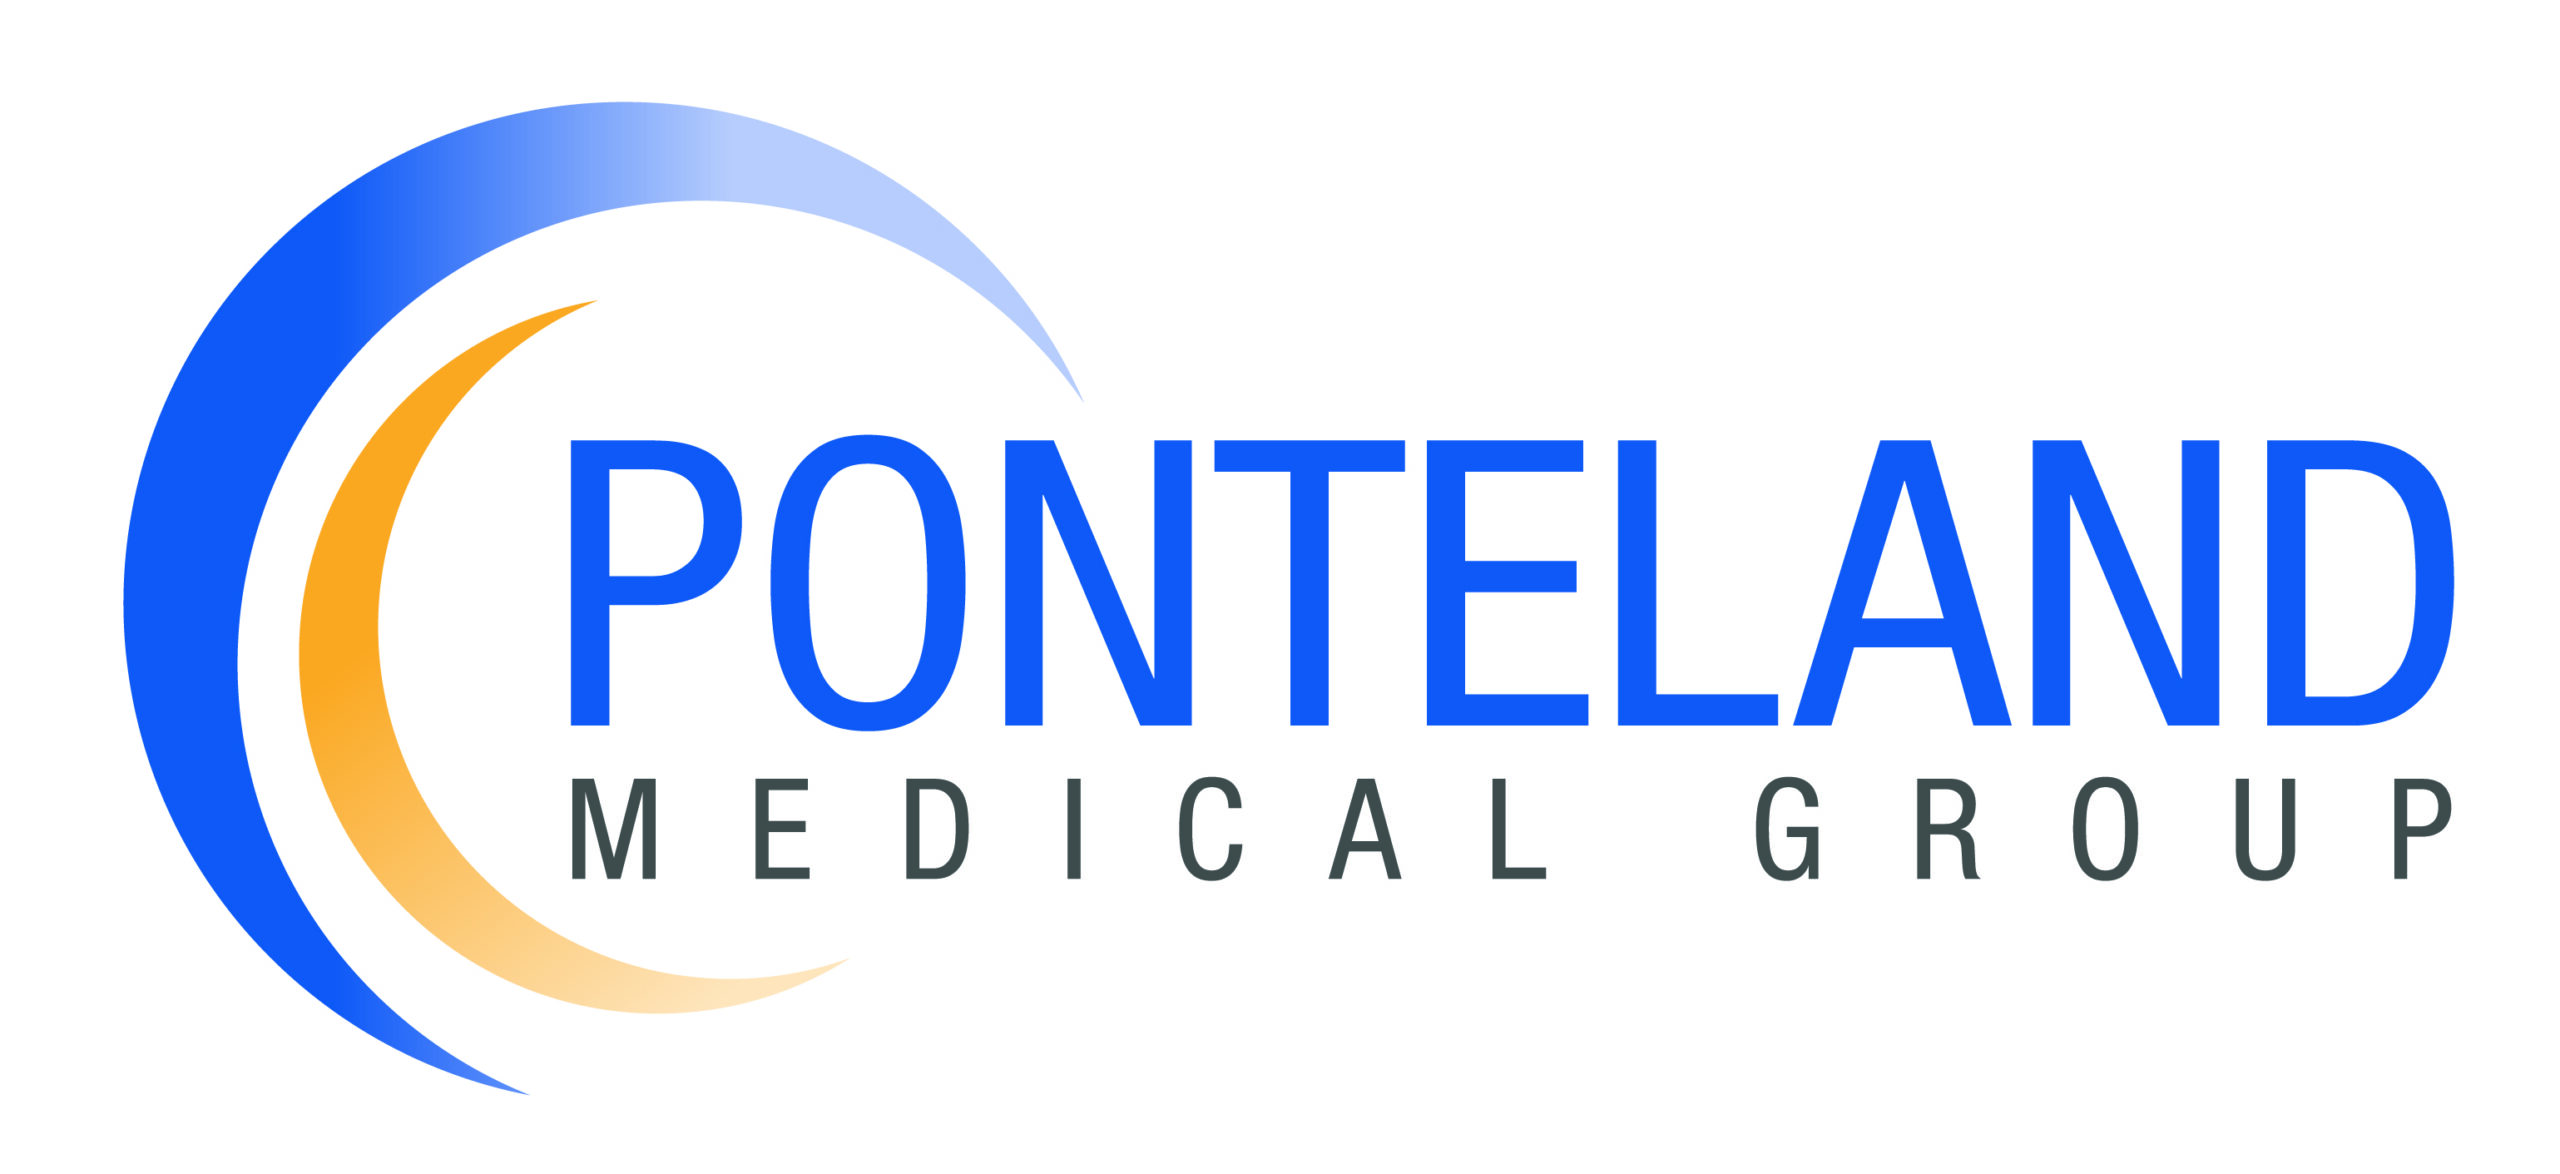 Ponteland Medical Group